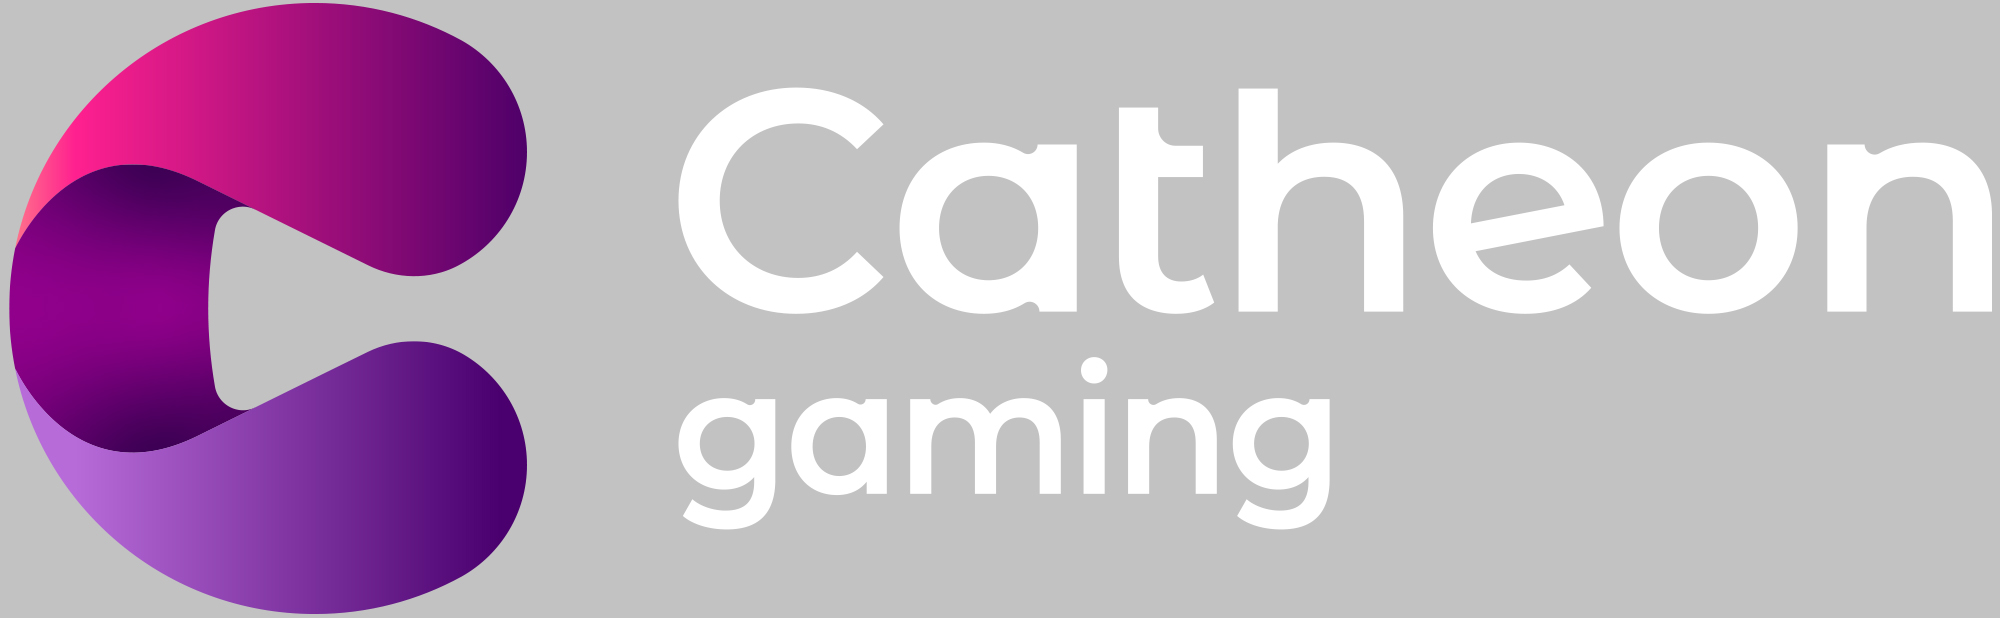 Catheon Gaming.jpg